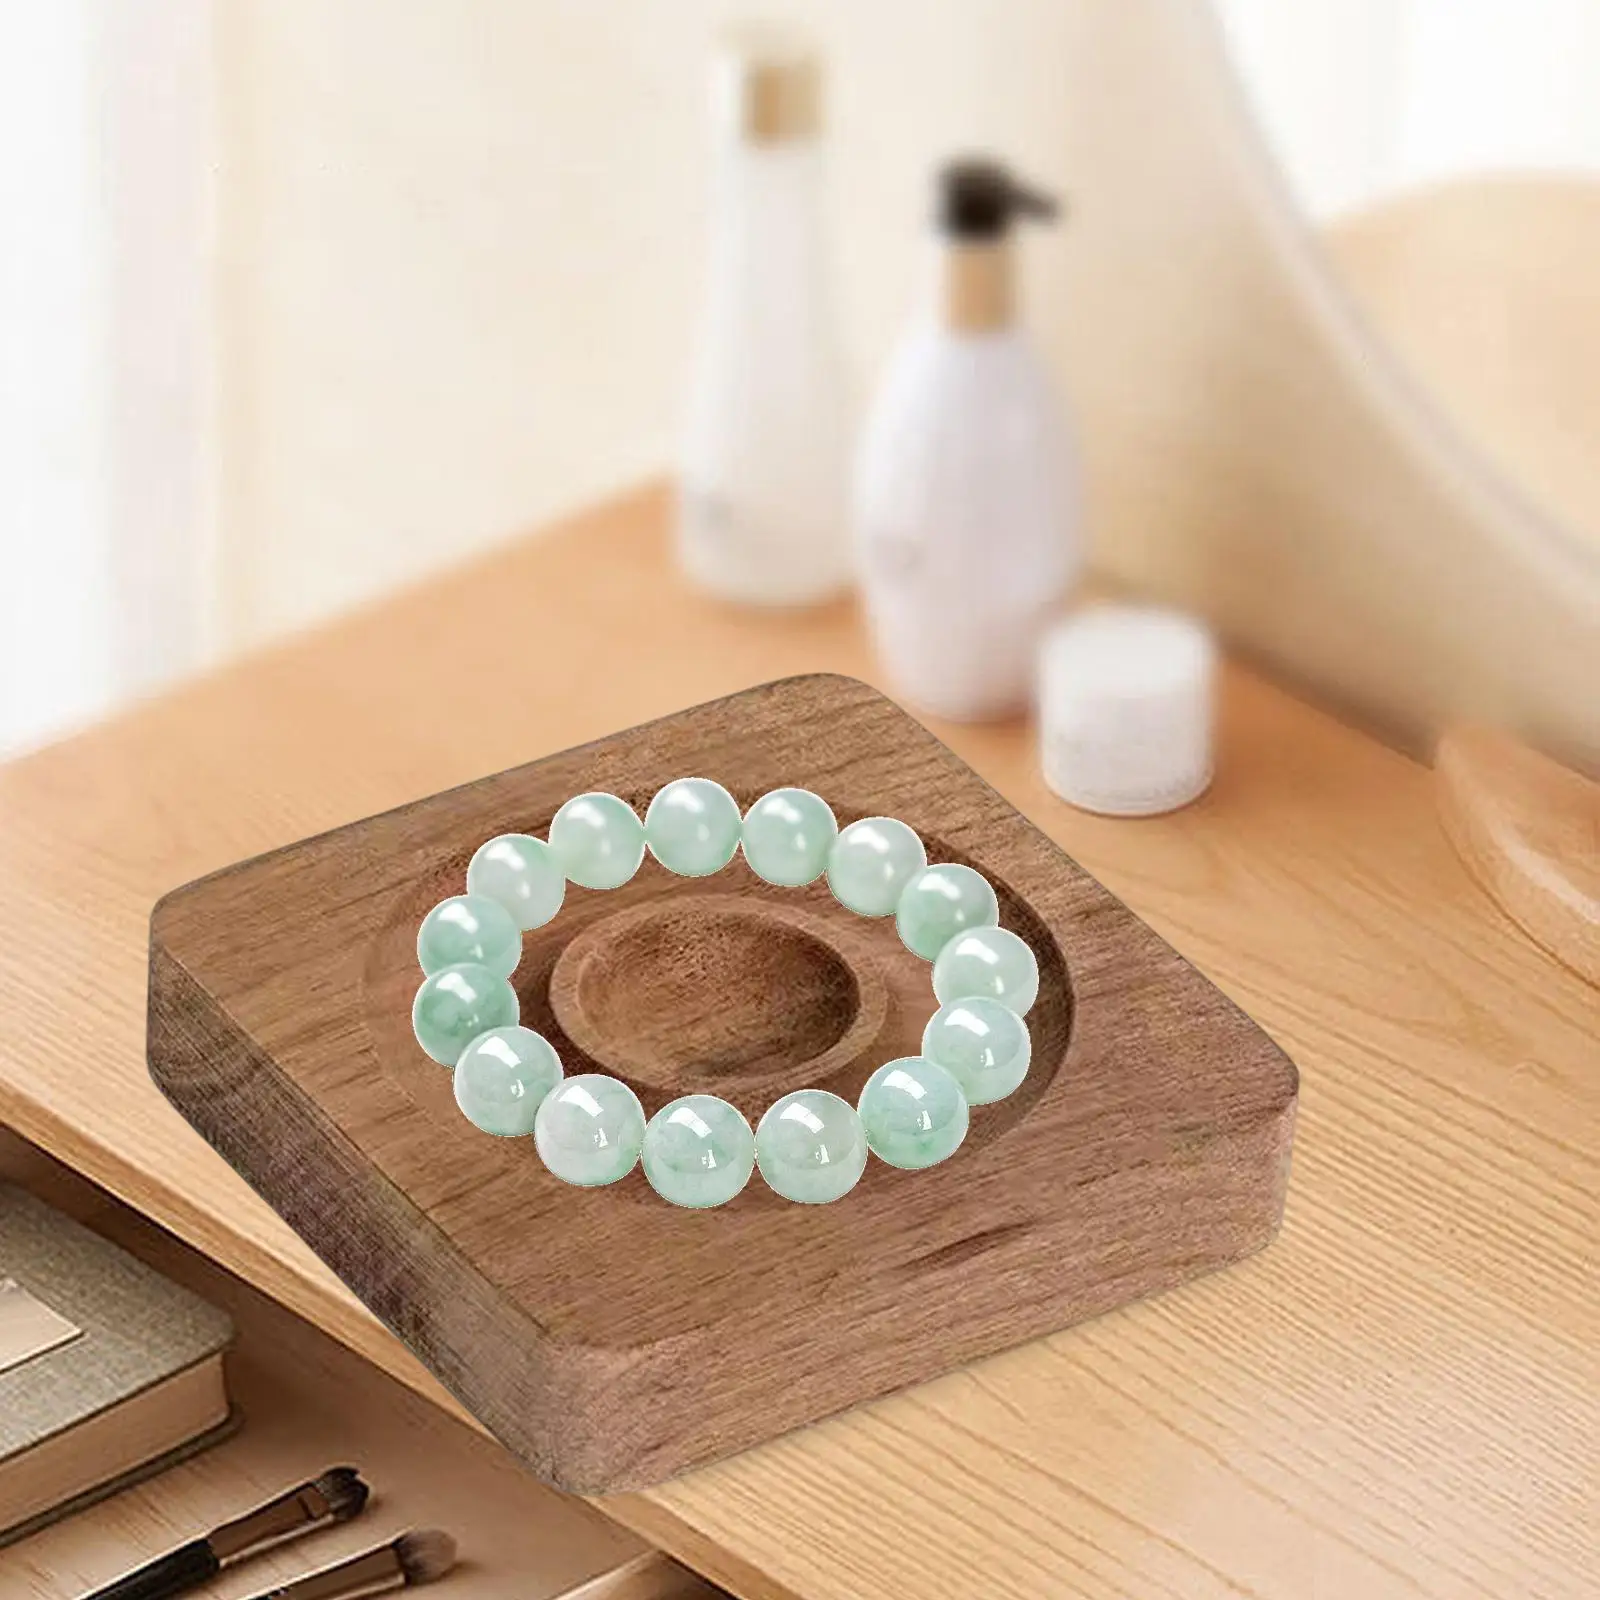 Wooden Bead Pendant Bracelet Bangle Display Tray Organizer Birthday Gift for Show